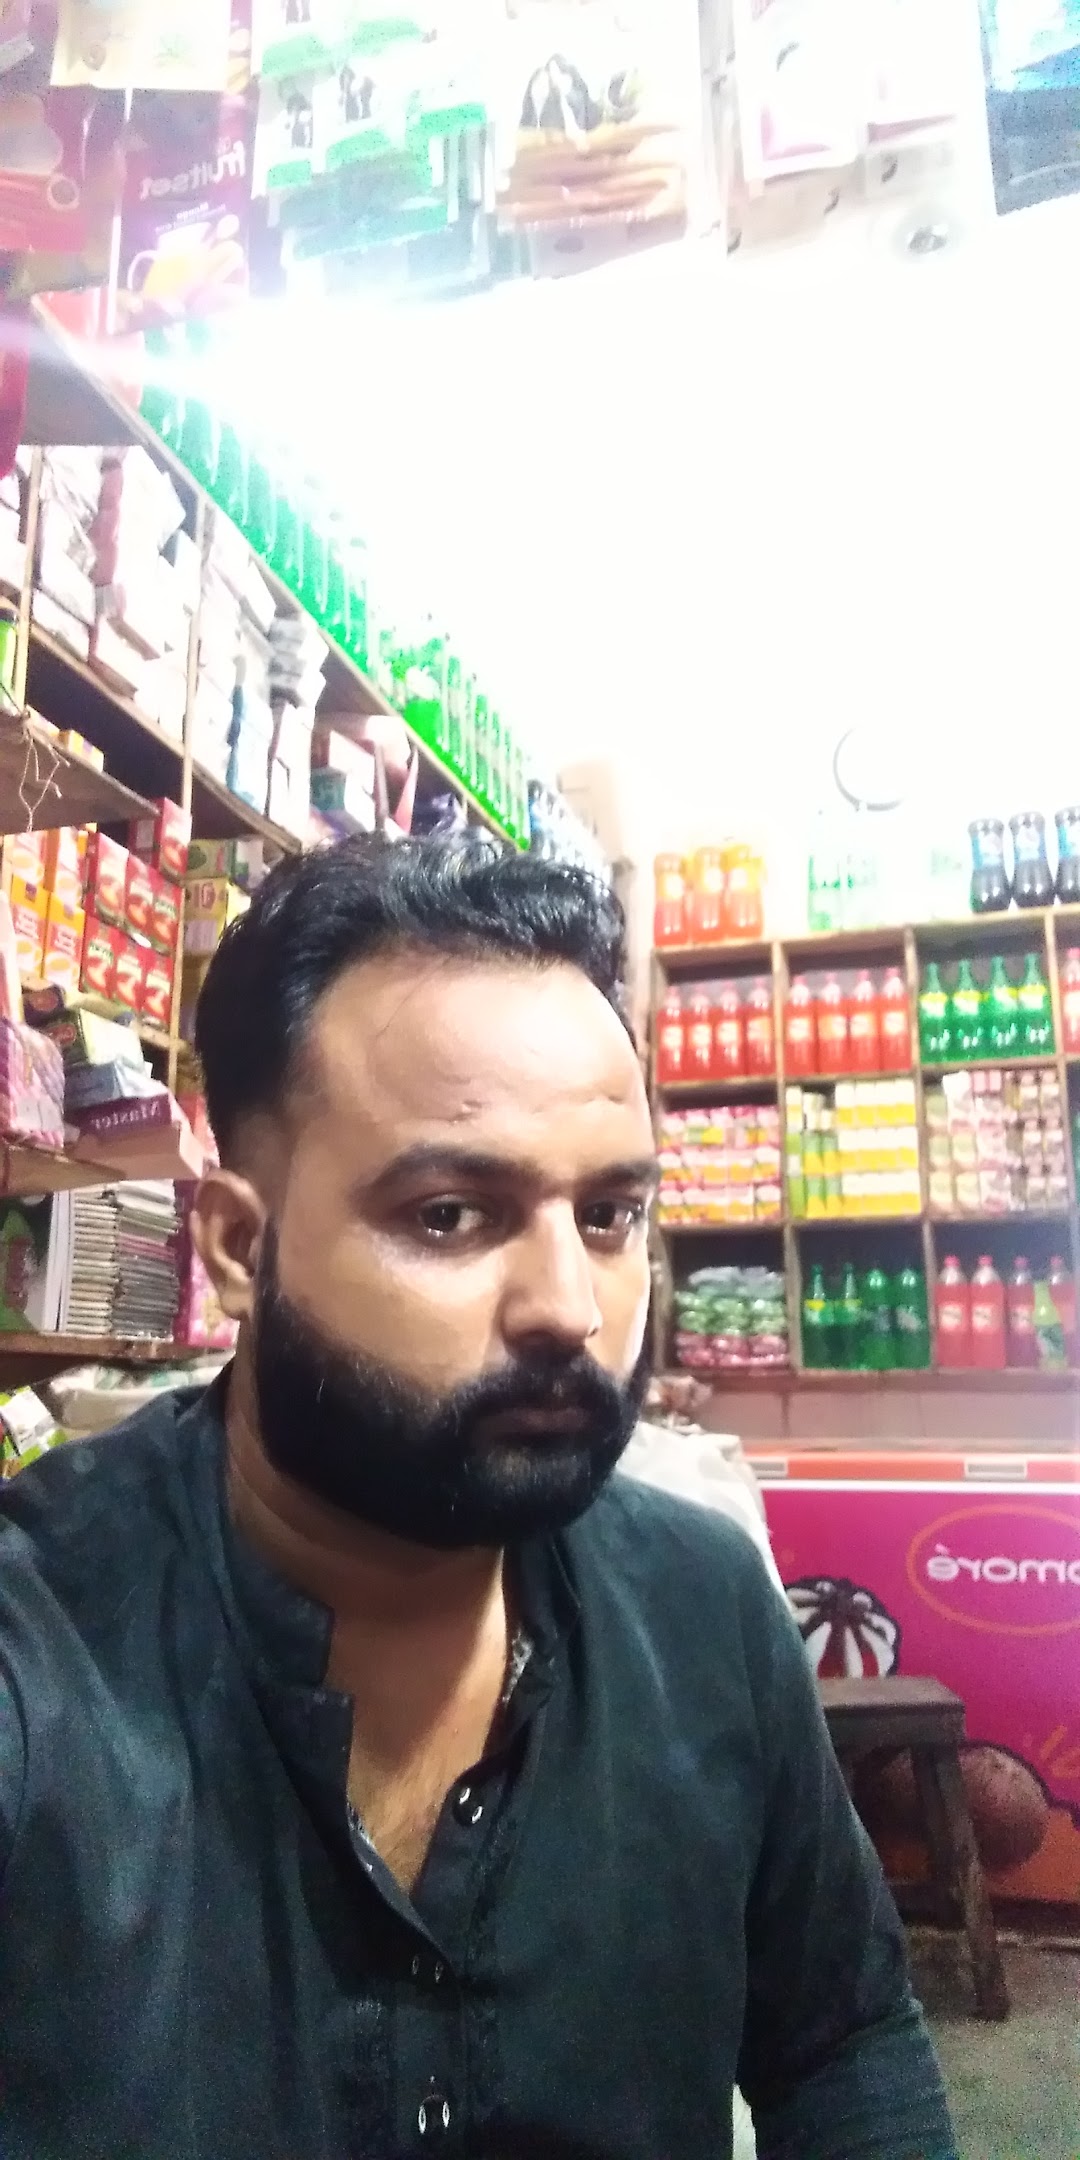 Nigah-e-Murshid General Store